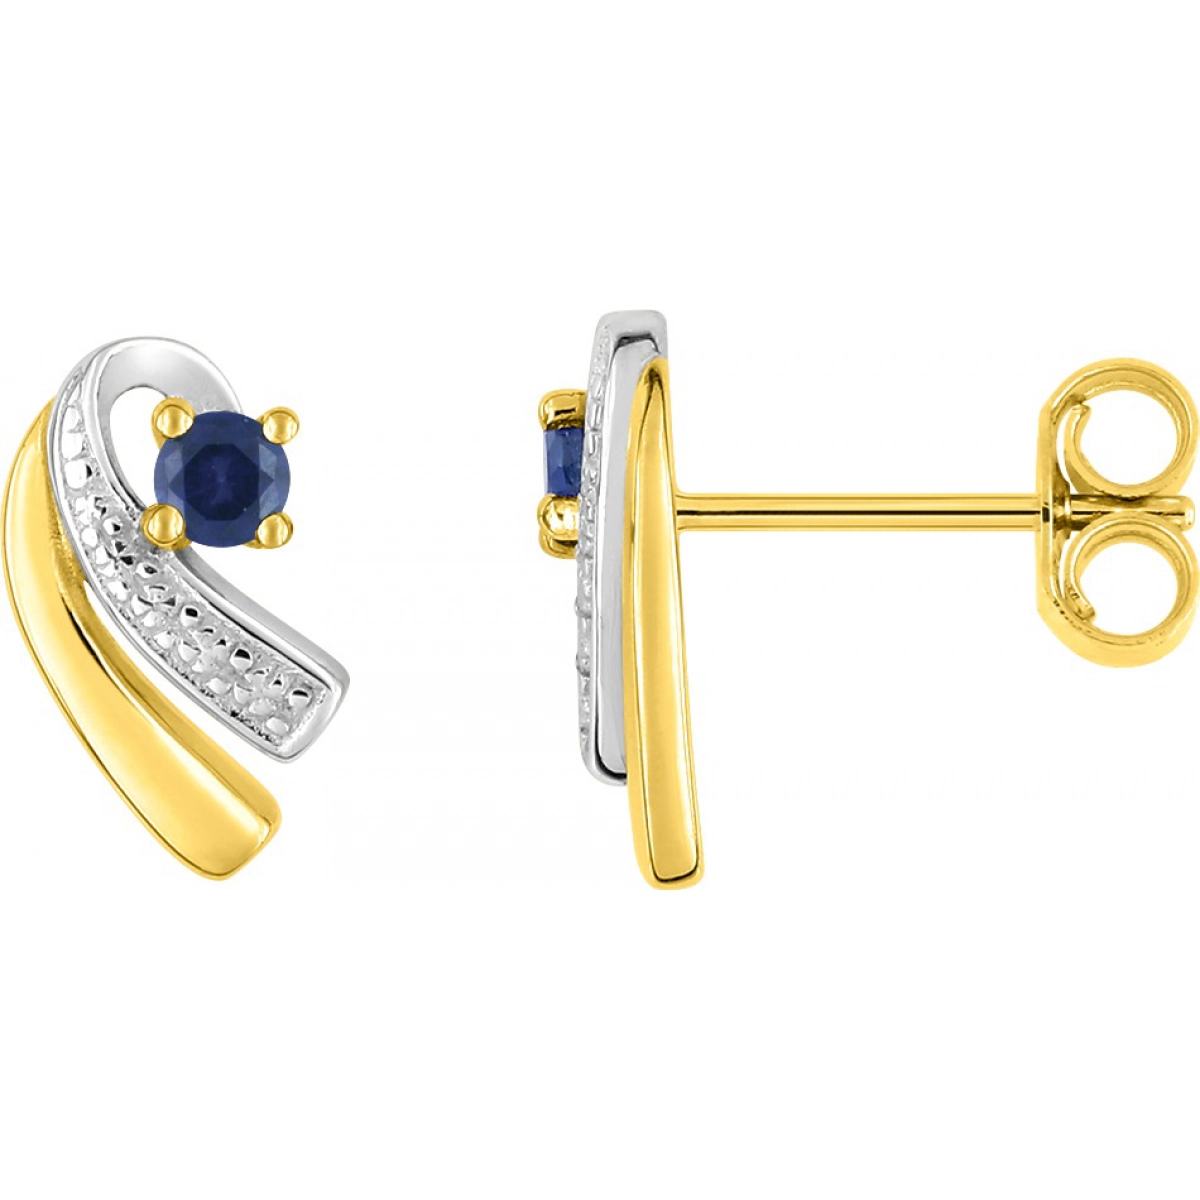 Earrings pair w. sapphire rhod 18K YG  Lua Blanca  2.7130.S3.0